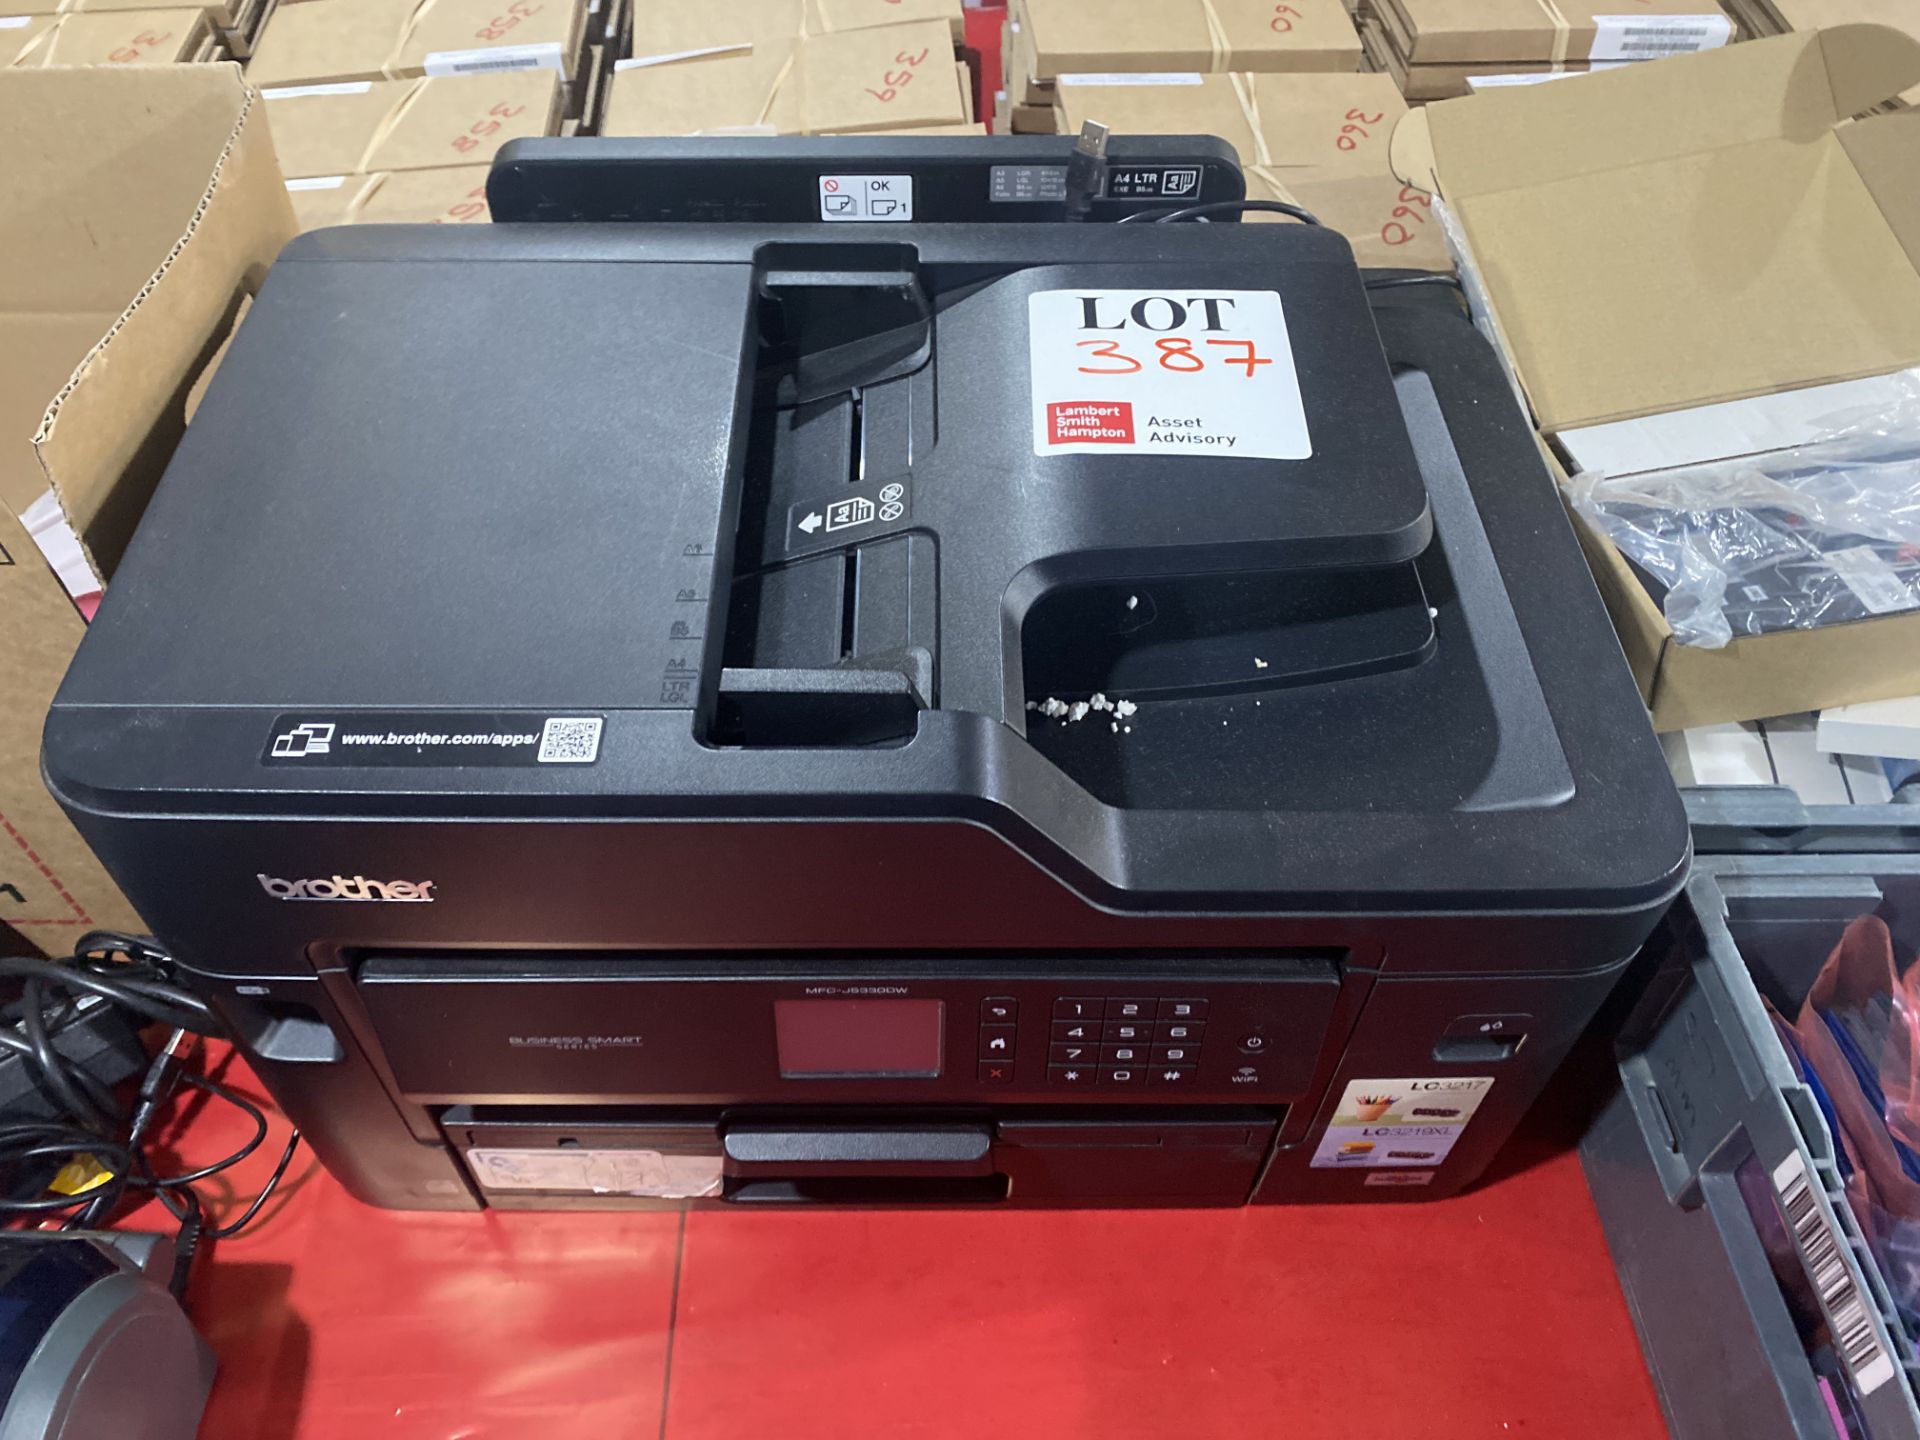 Brother Business Smart Series MFC-J5330 DW scanner/printer